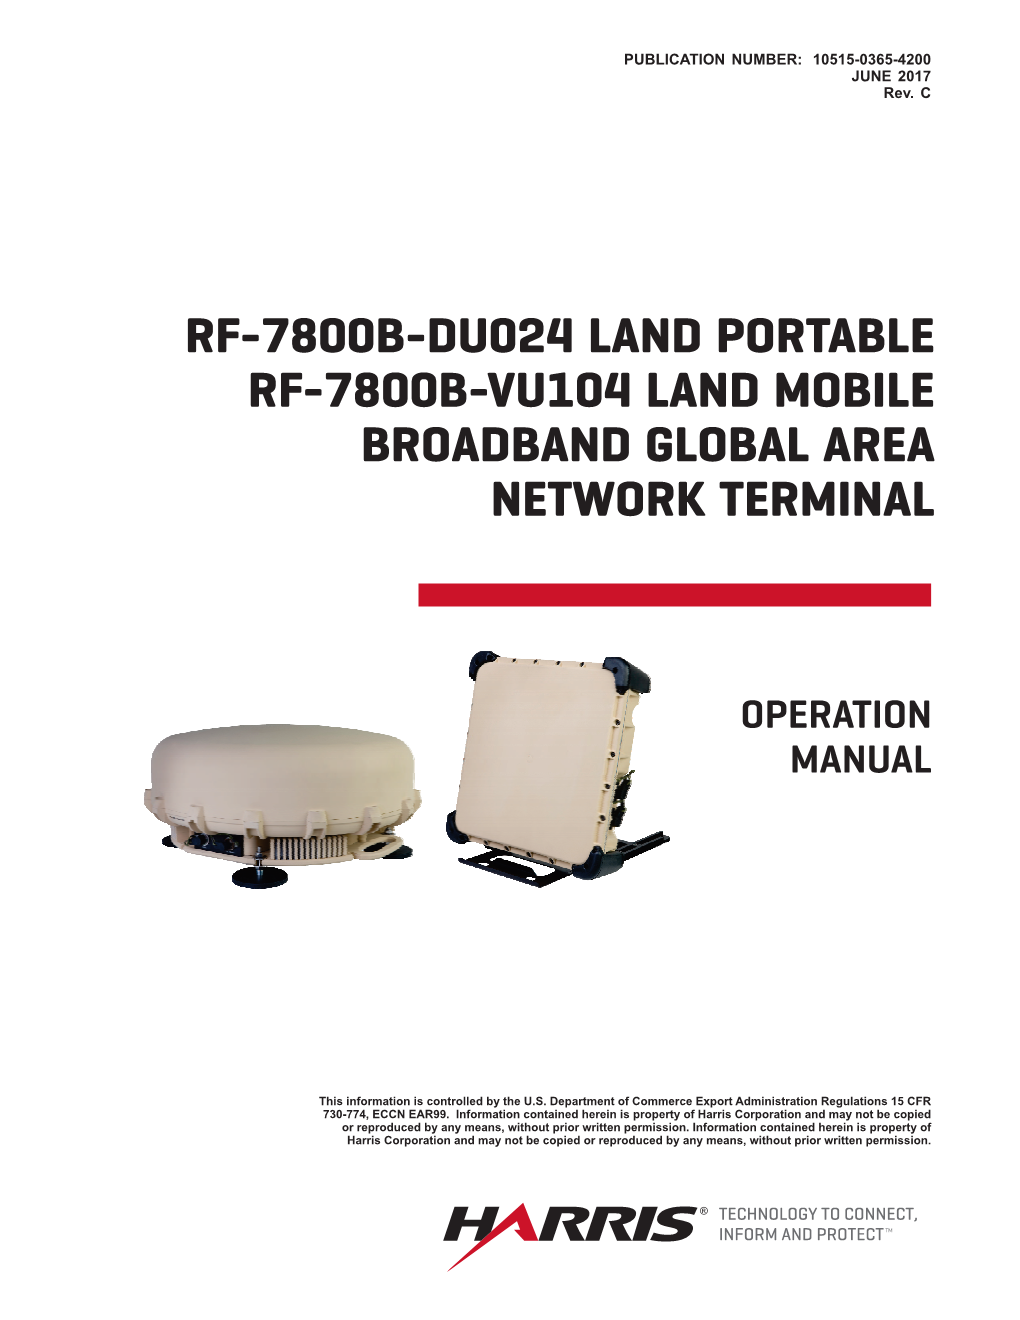 RF-7800B Broadband Global Area Network (BGAN) Terminals (Referred to Throughout This Manual As BGAN Terminal)